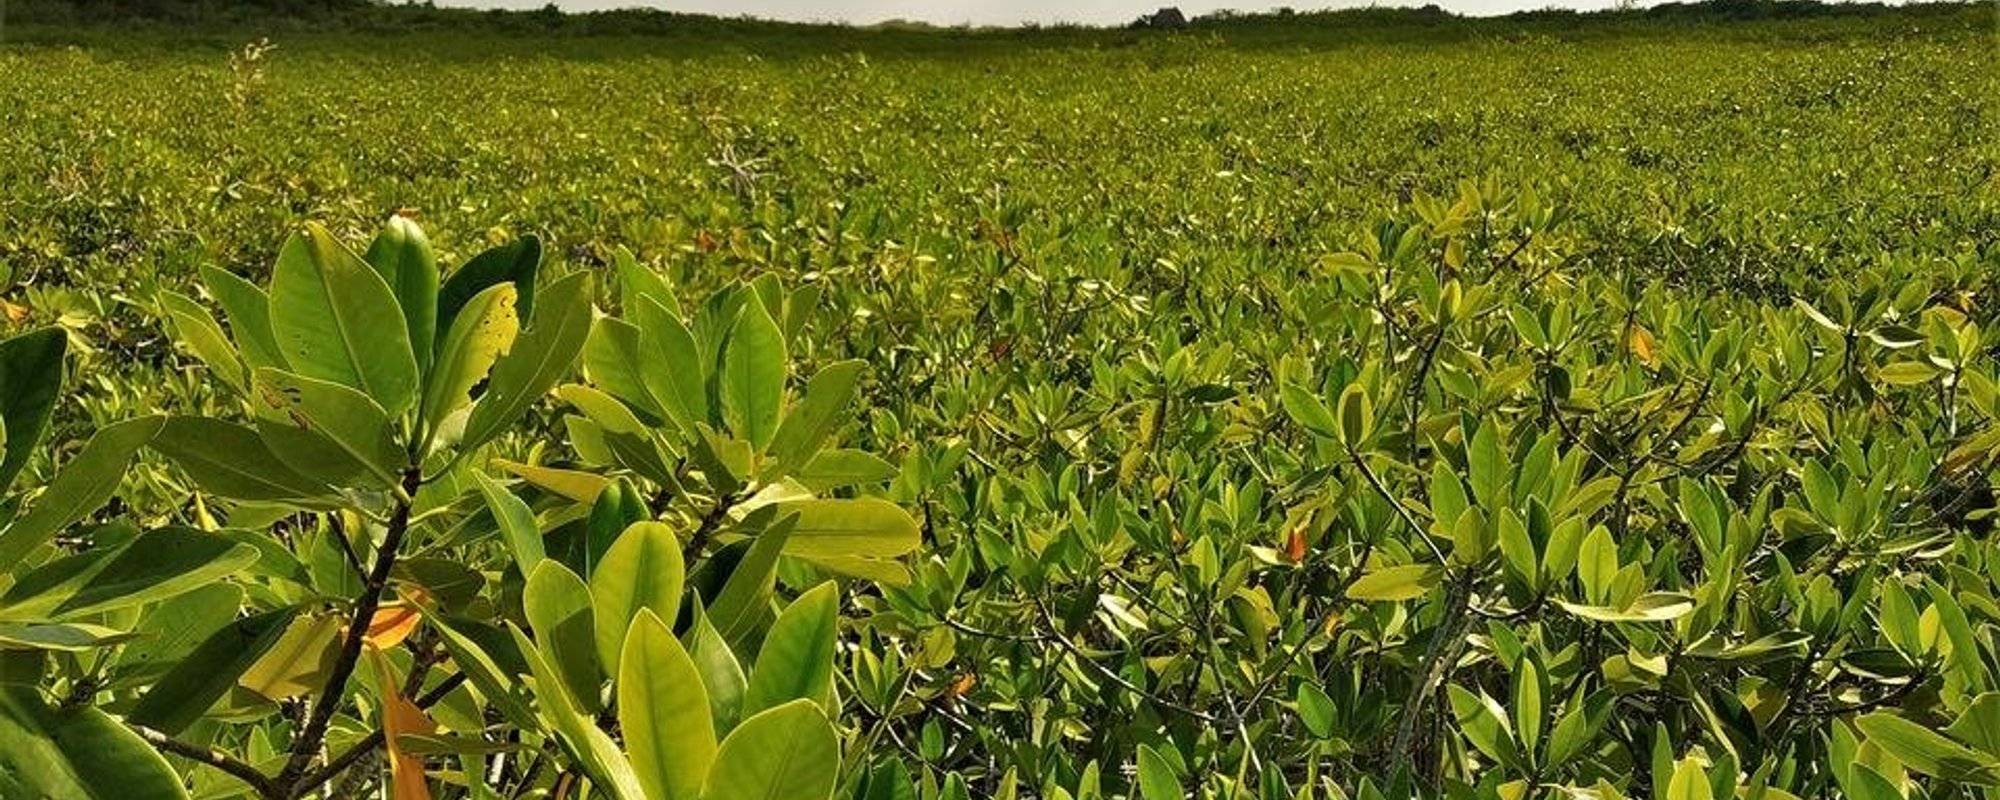 Beauties of Yucatan: lush greenery of the mangroves